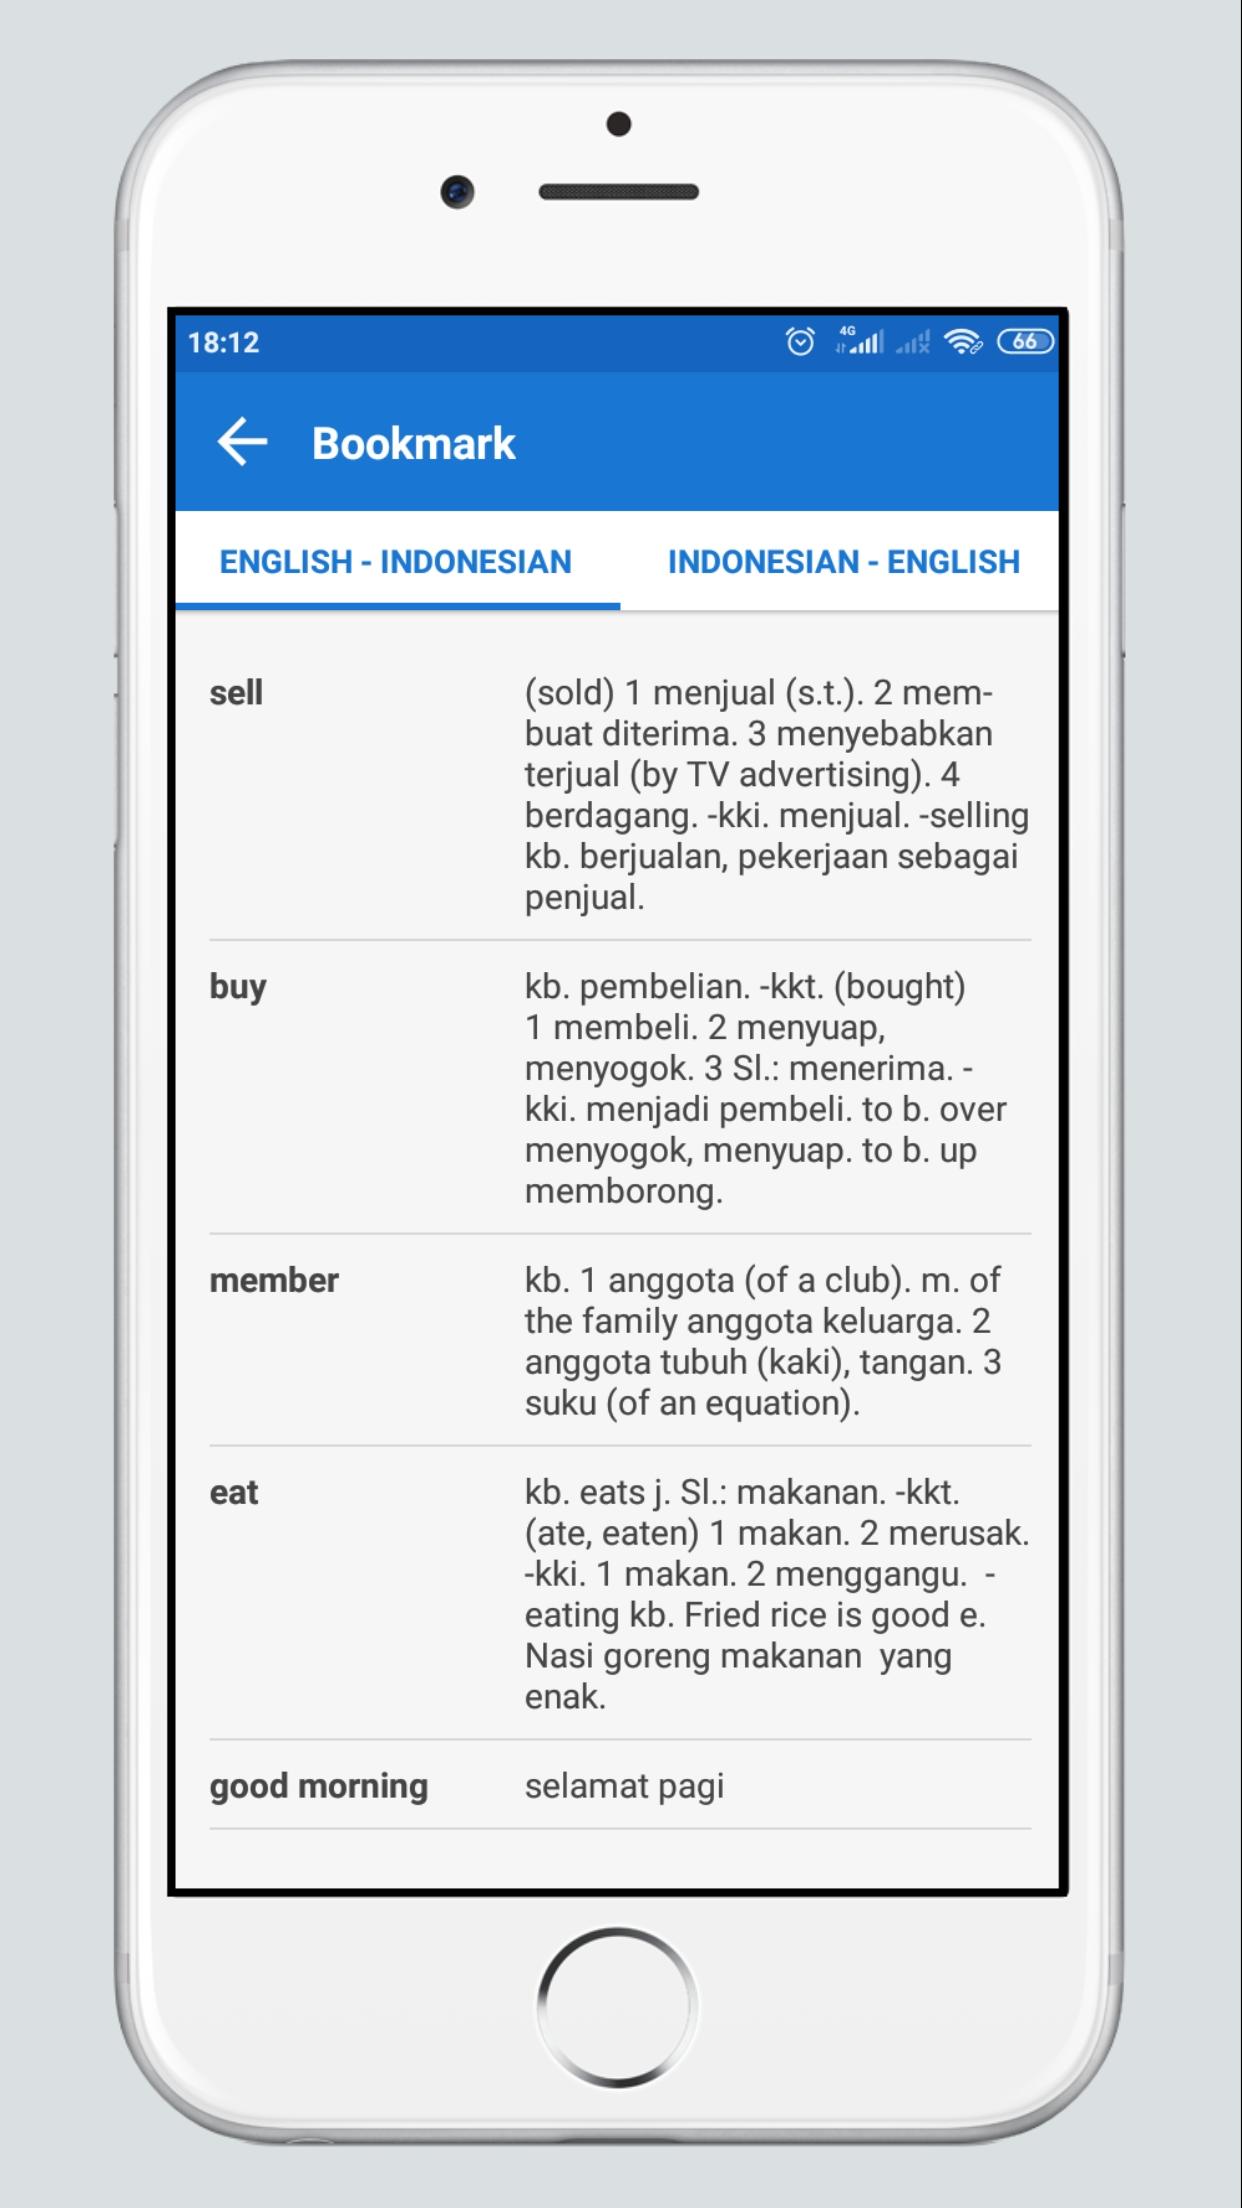 English - Indonesian Dictionary 1.0.2 Screenshot 7